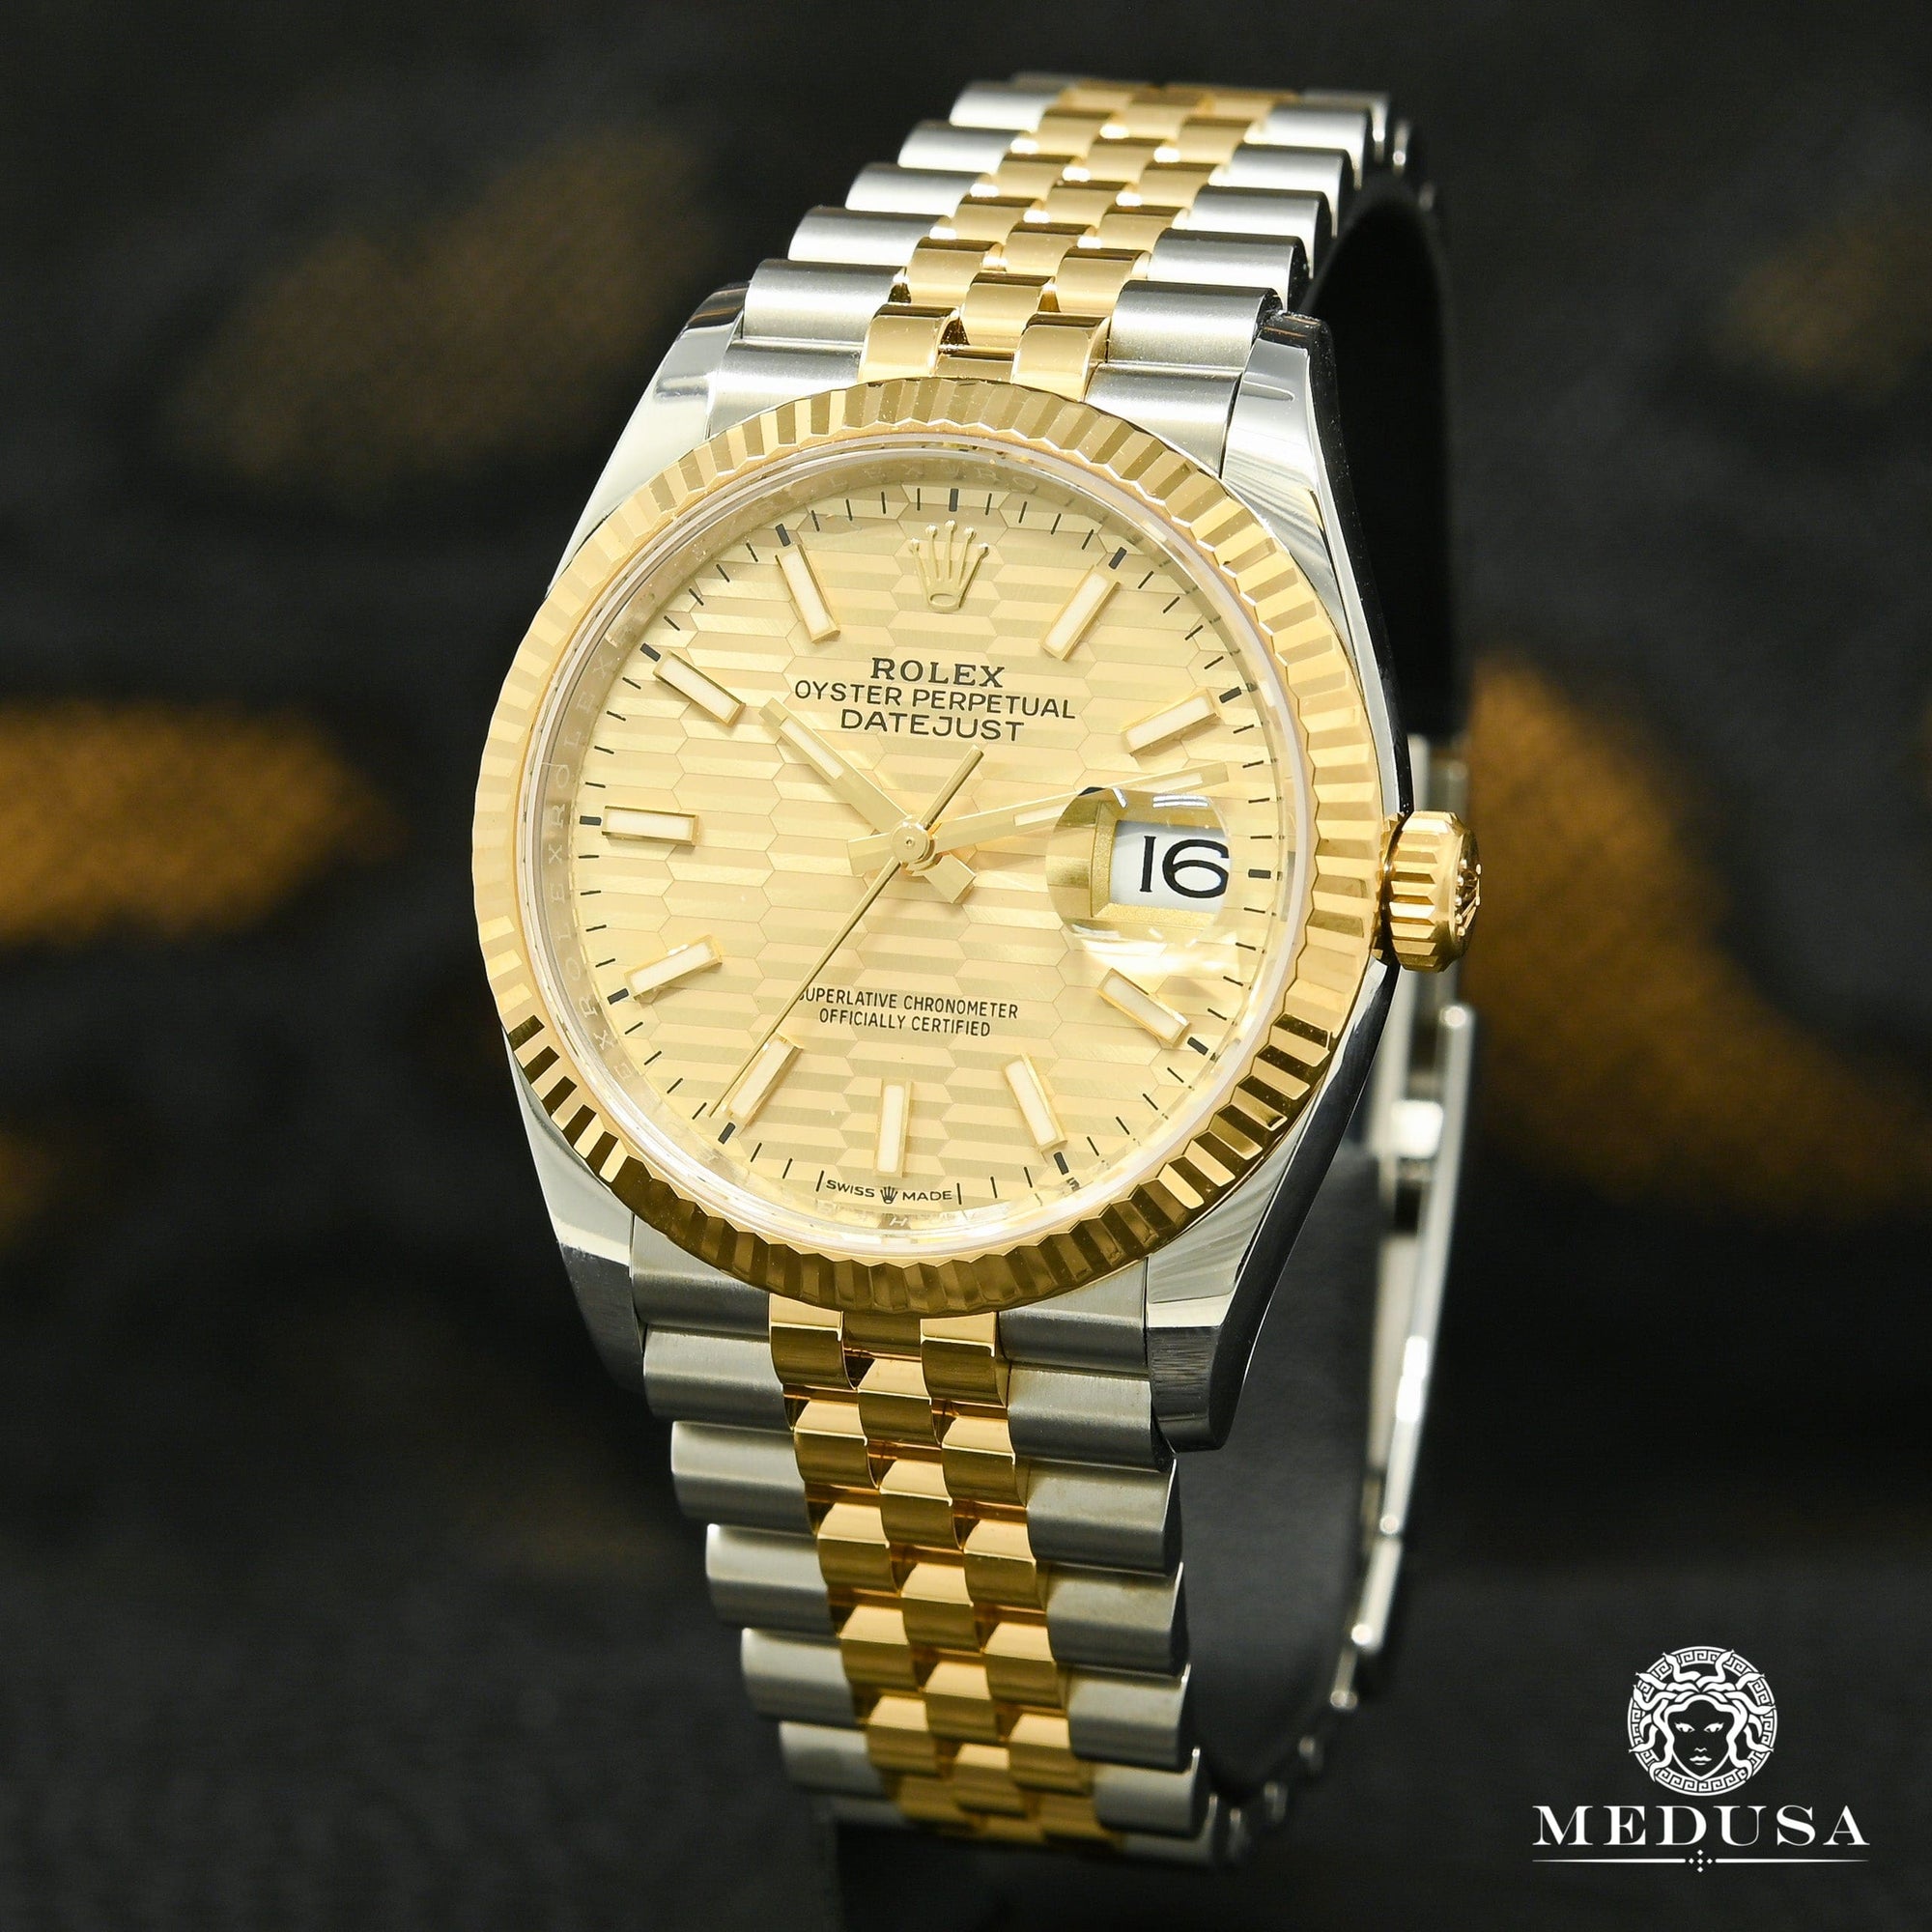 Rolex watch | Rolex Datejust Men's Watch 36mm - Jubilee Fluted Pattern 2 Tone Gold Dial